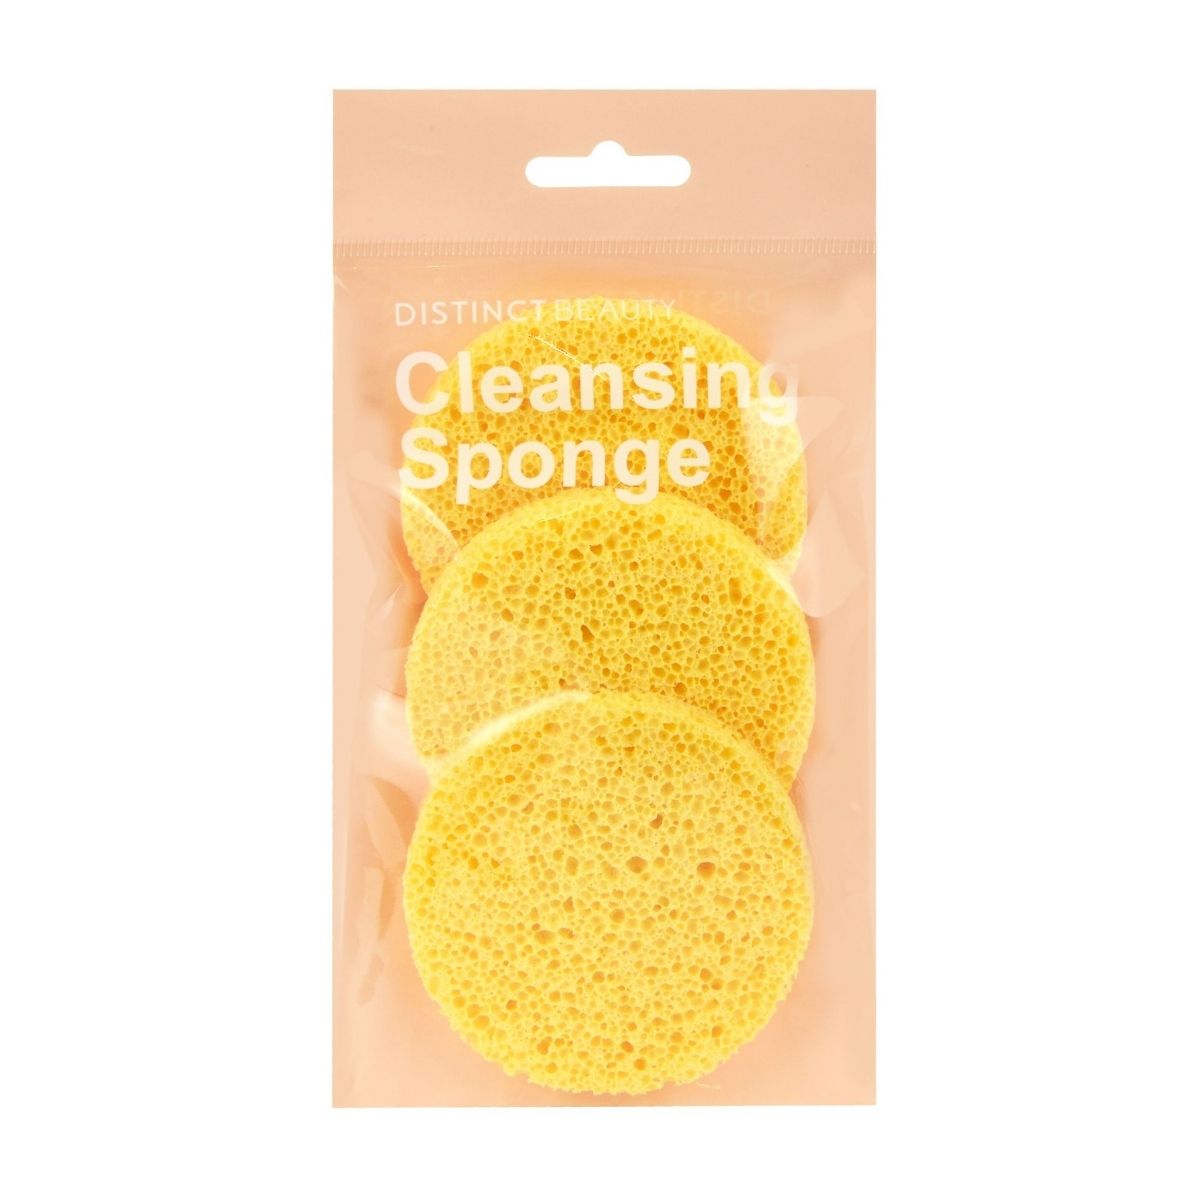 Distinct Beauty Cleansing Sponges